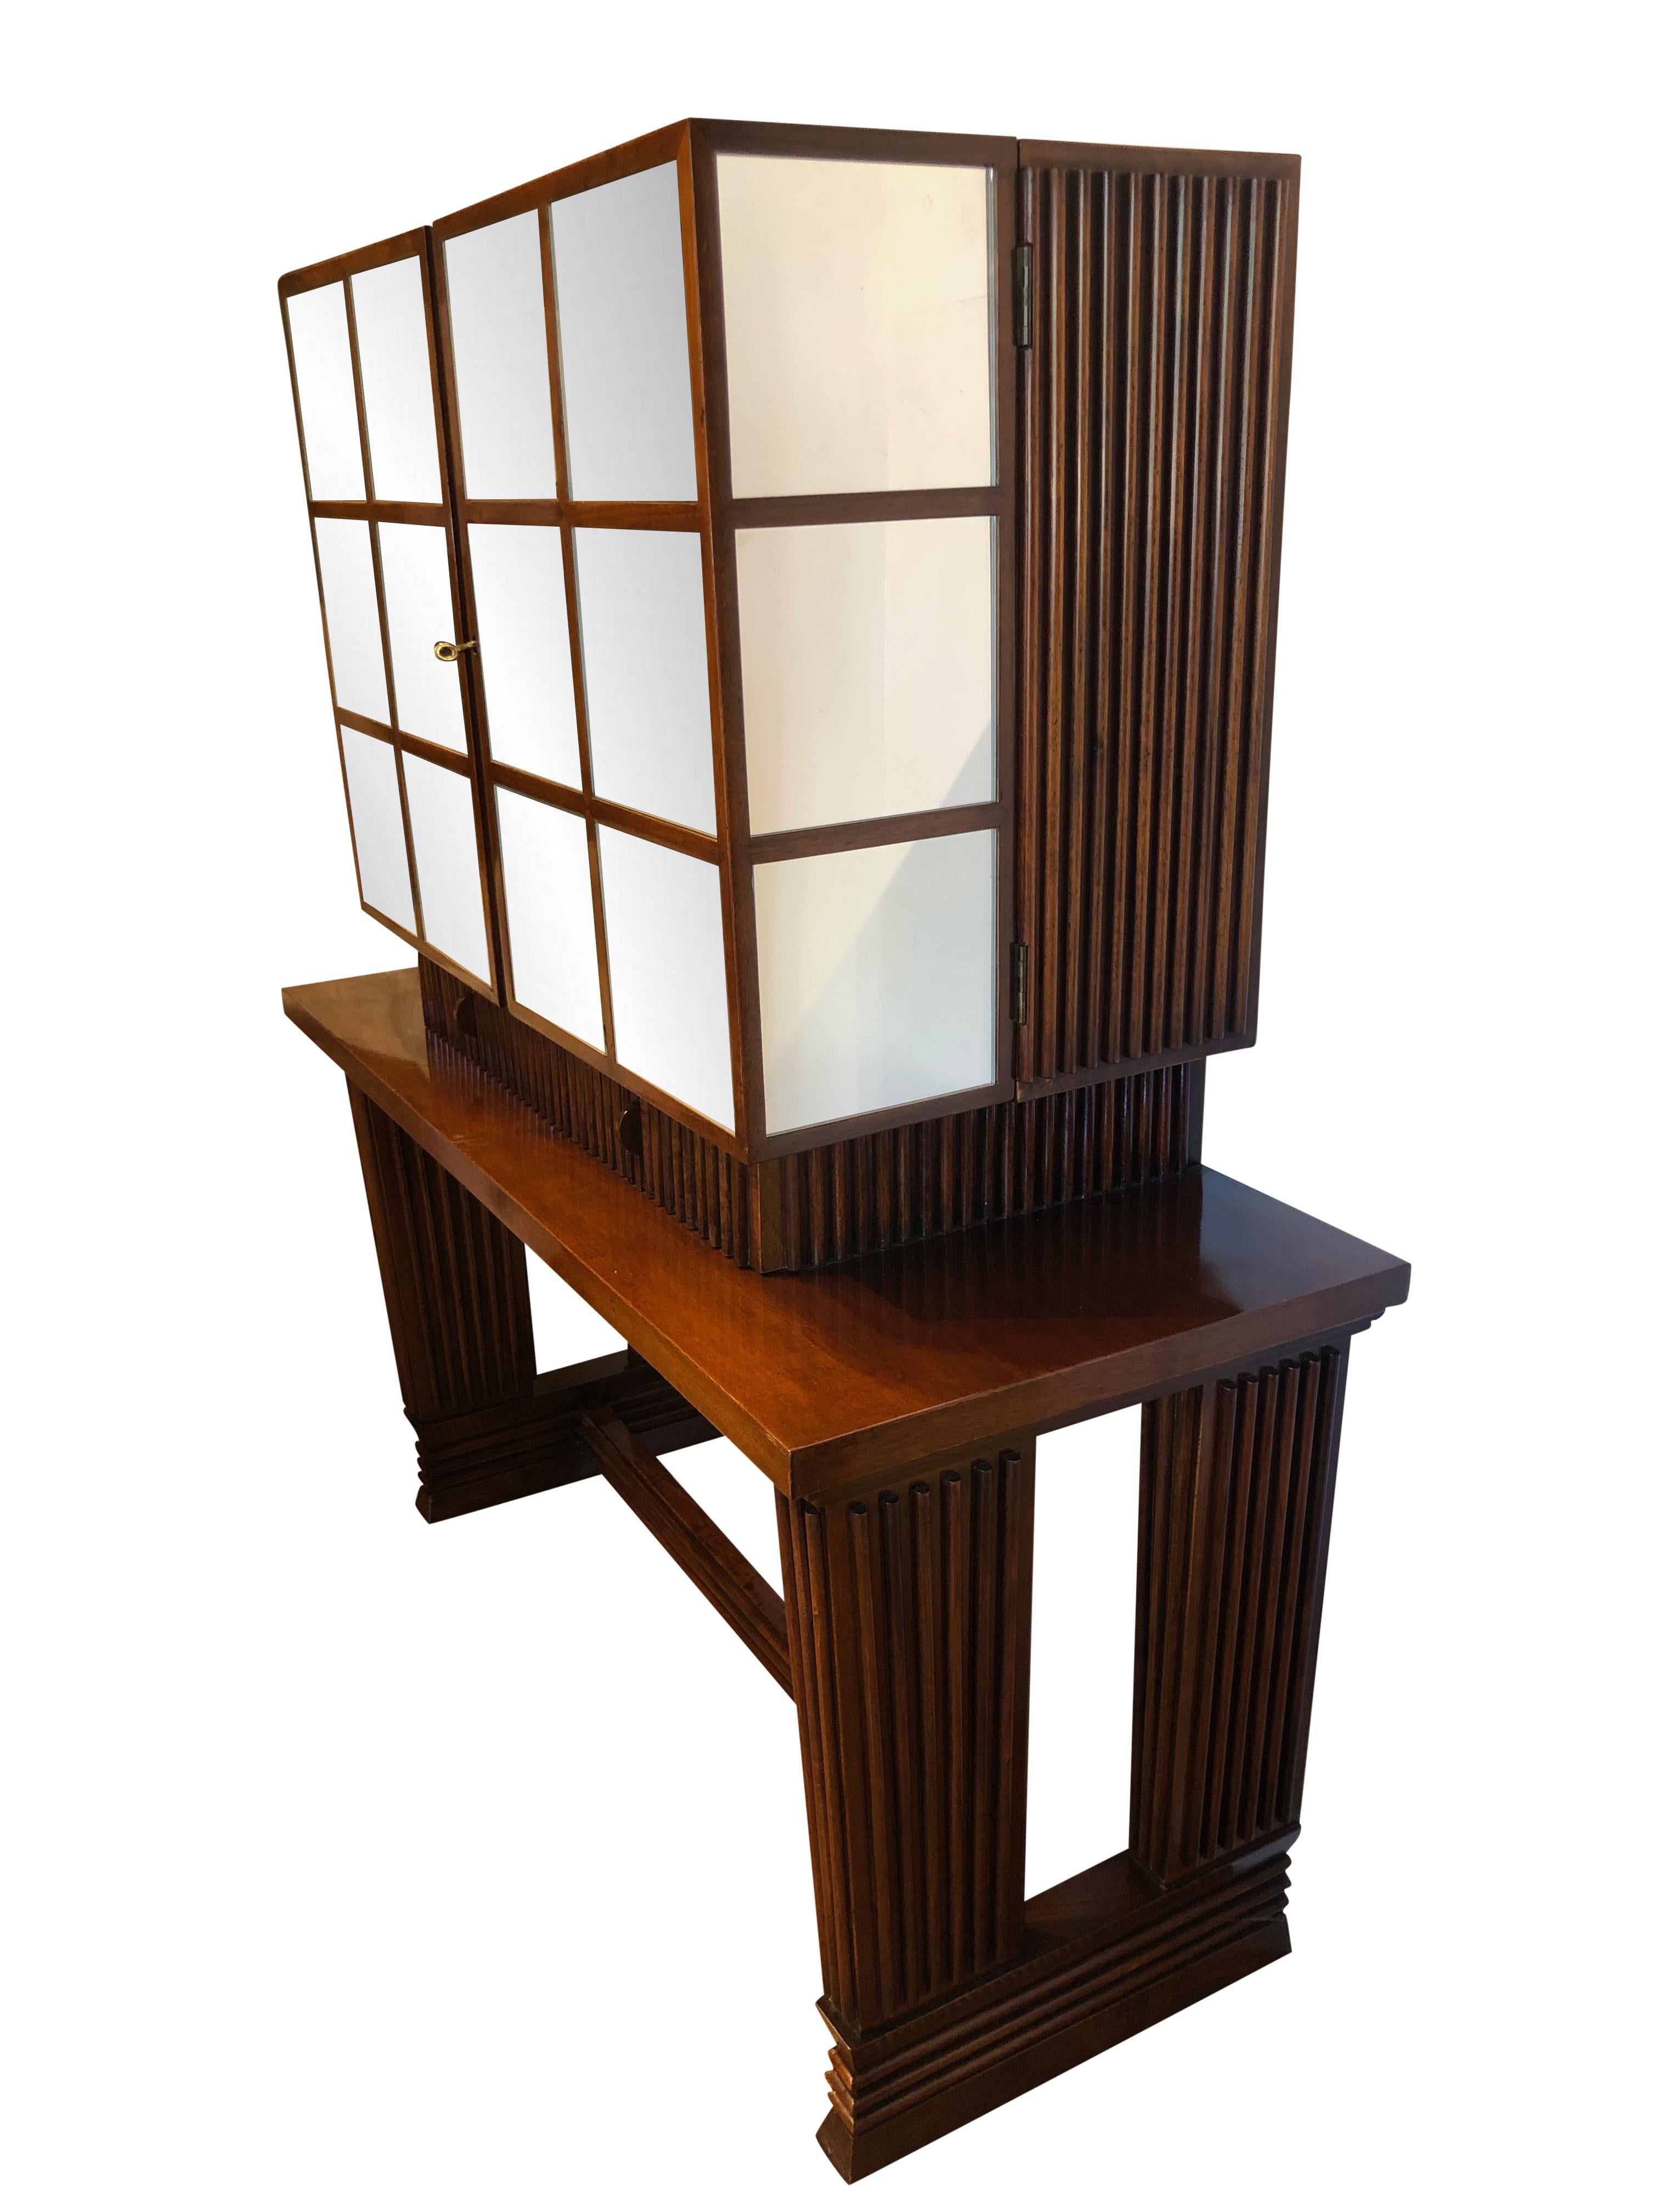 20th Century Italian Art Deco Dry Bar - Vintage Mirrored Mahogany Cabinet For Sale 2